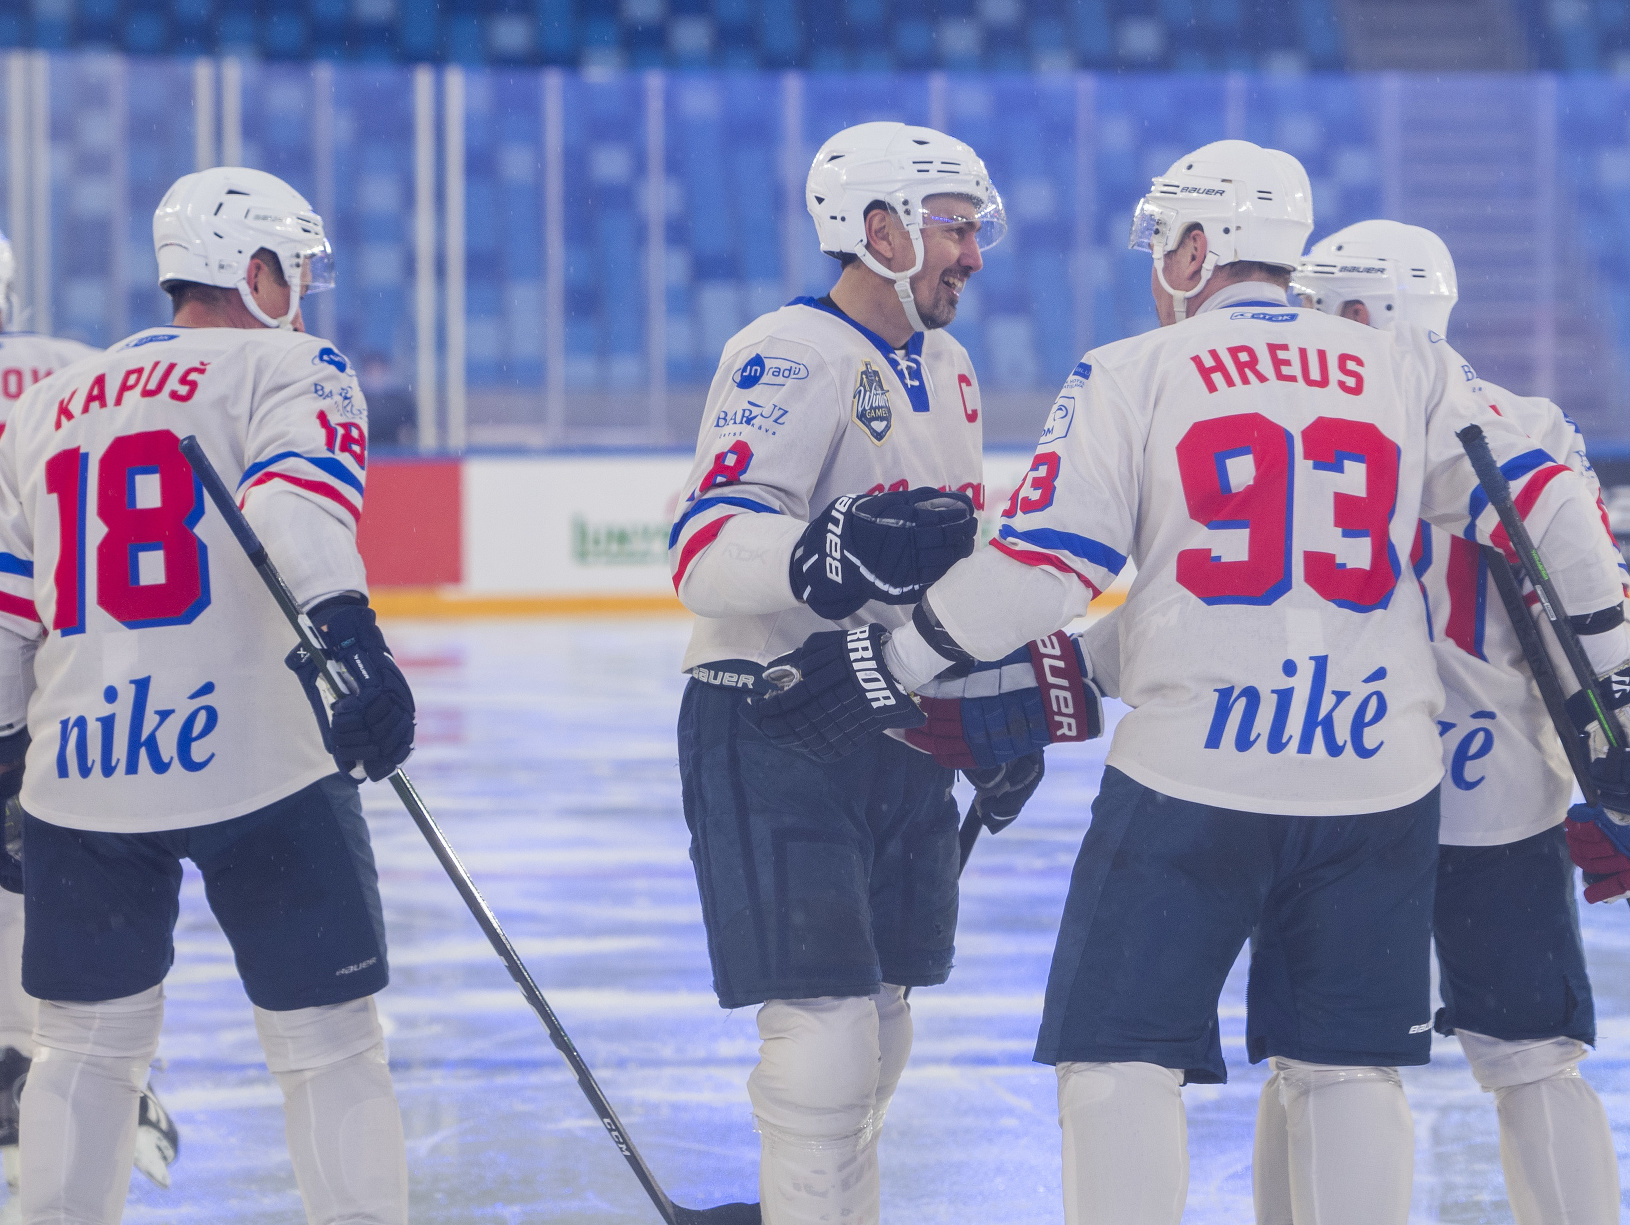 Hokejisti Slovana sa tešia